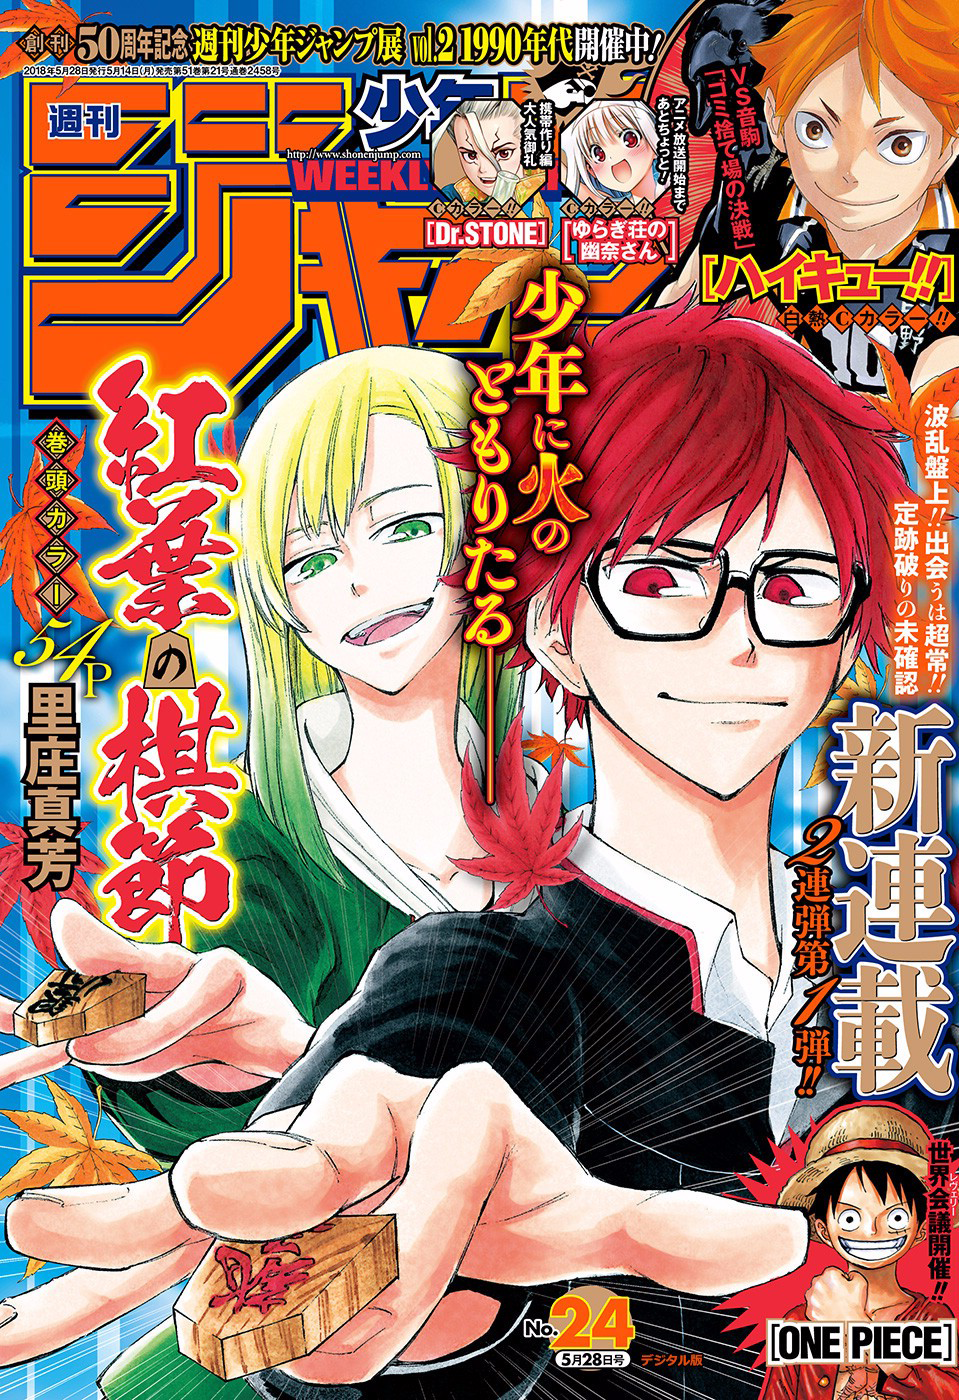 Weekly Shonen Jump Issue 24 18 Jump Database Fandom